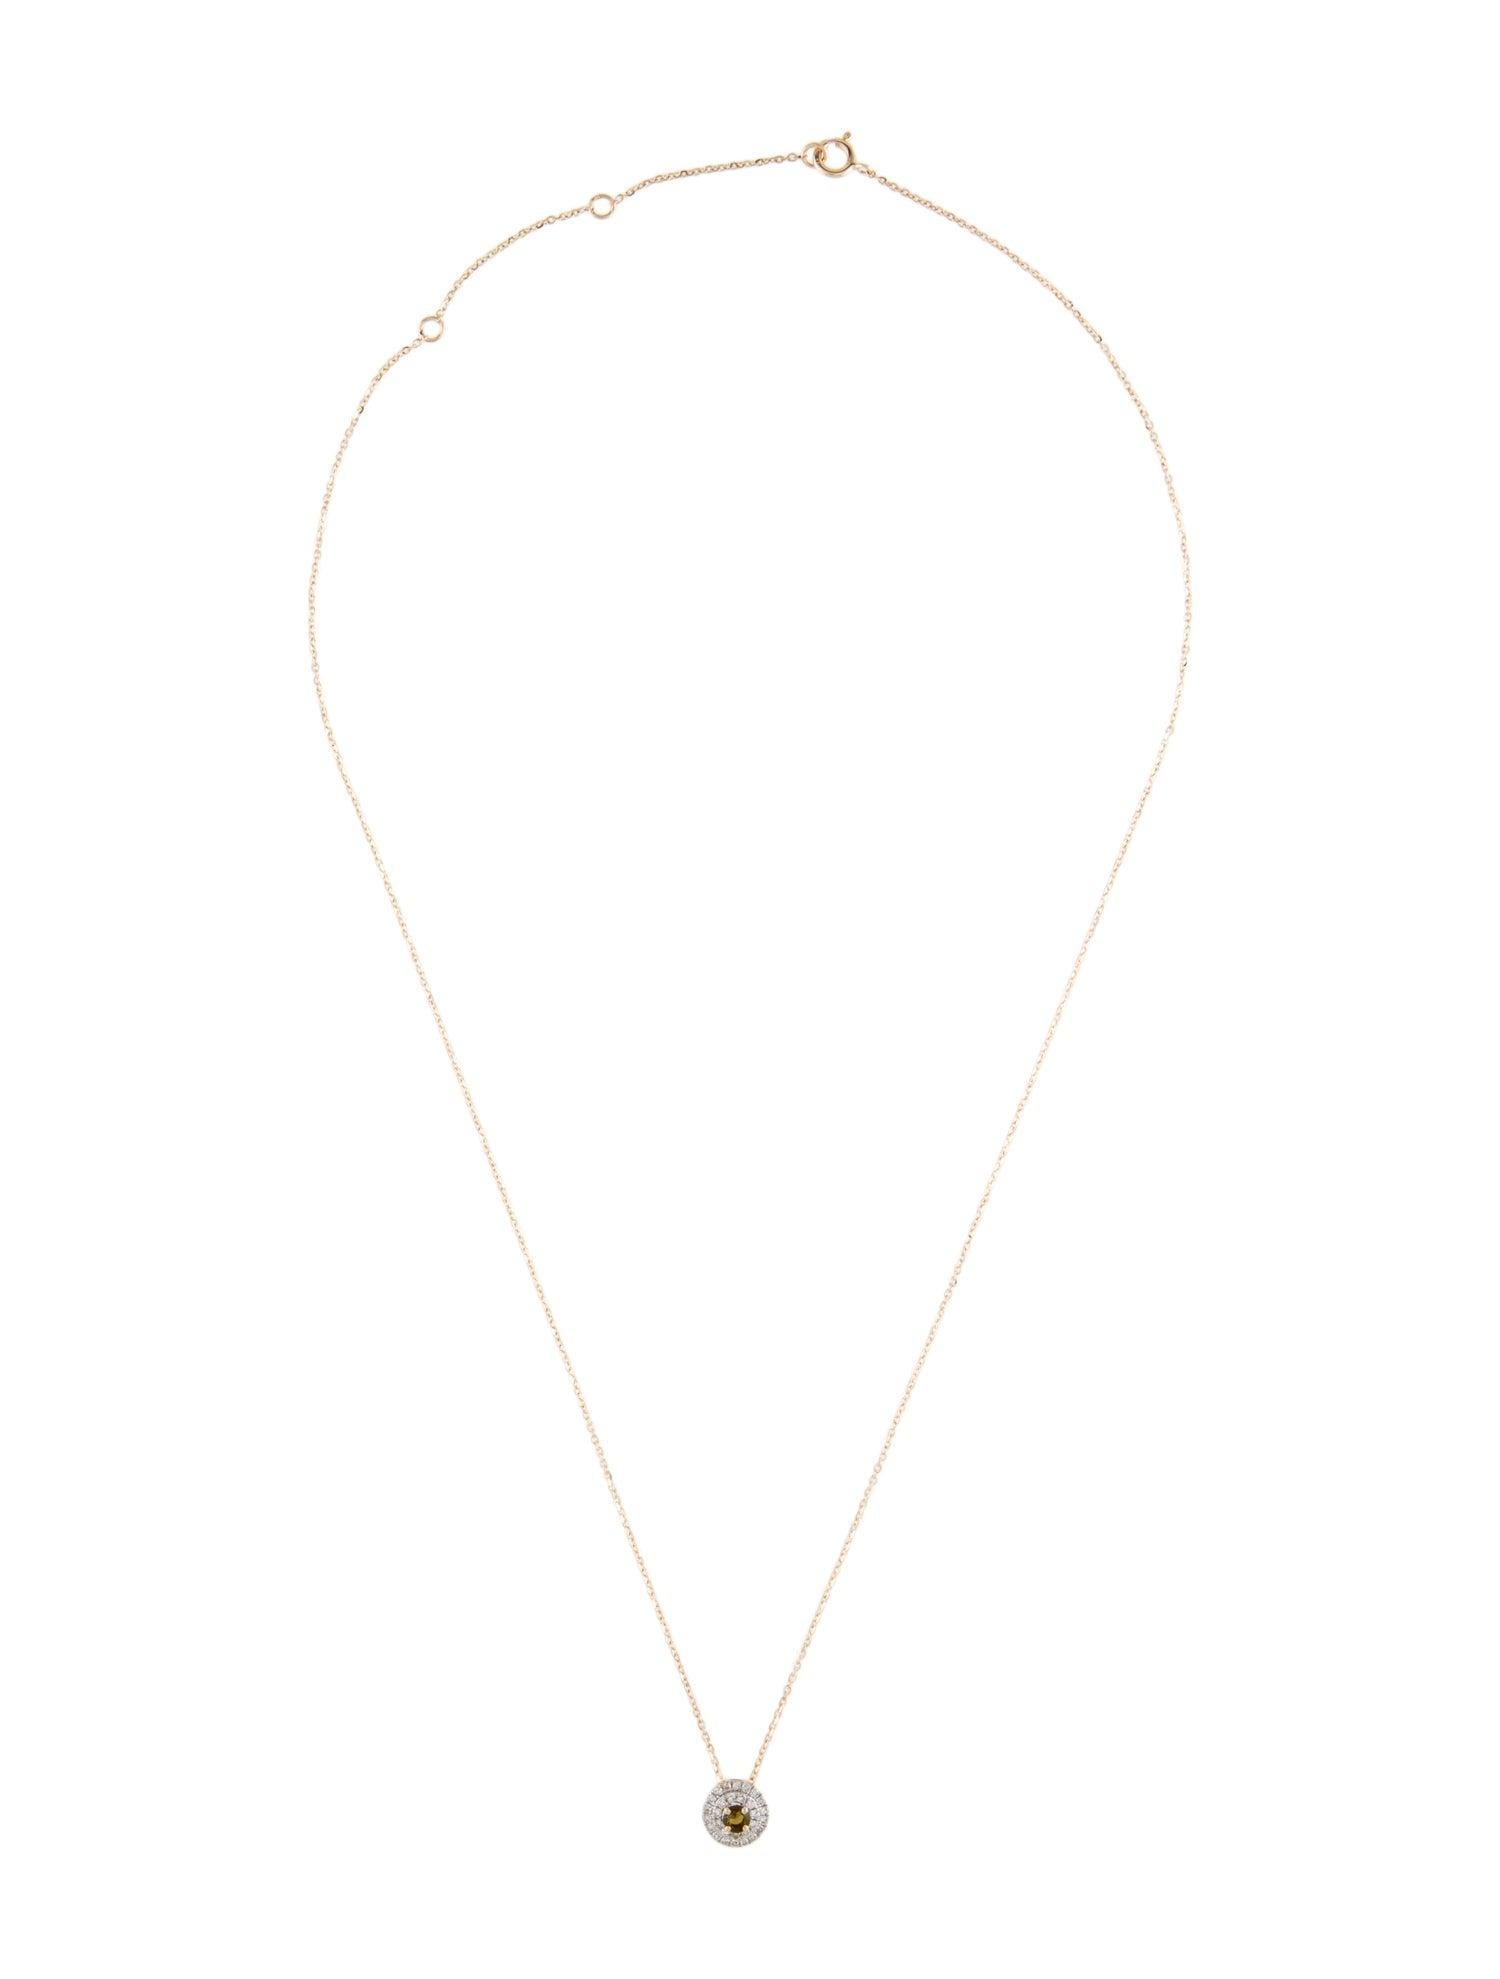 Brilliant Cut Exquisite 14K Tourmaline & Diamond Pendant Necklace: Timeless Elegance, Luxury For Sale